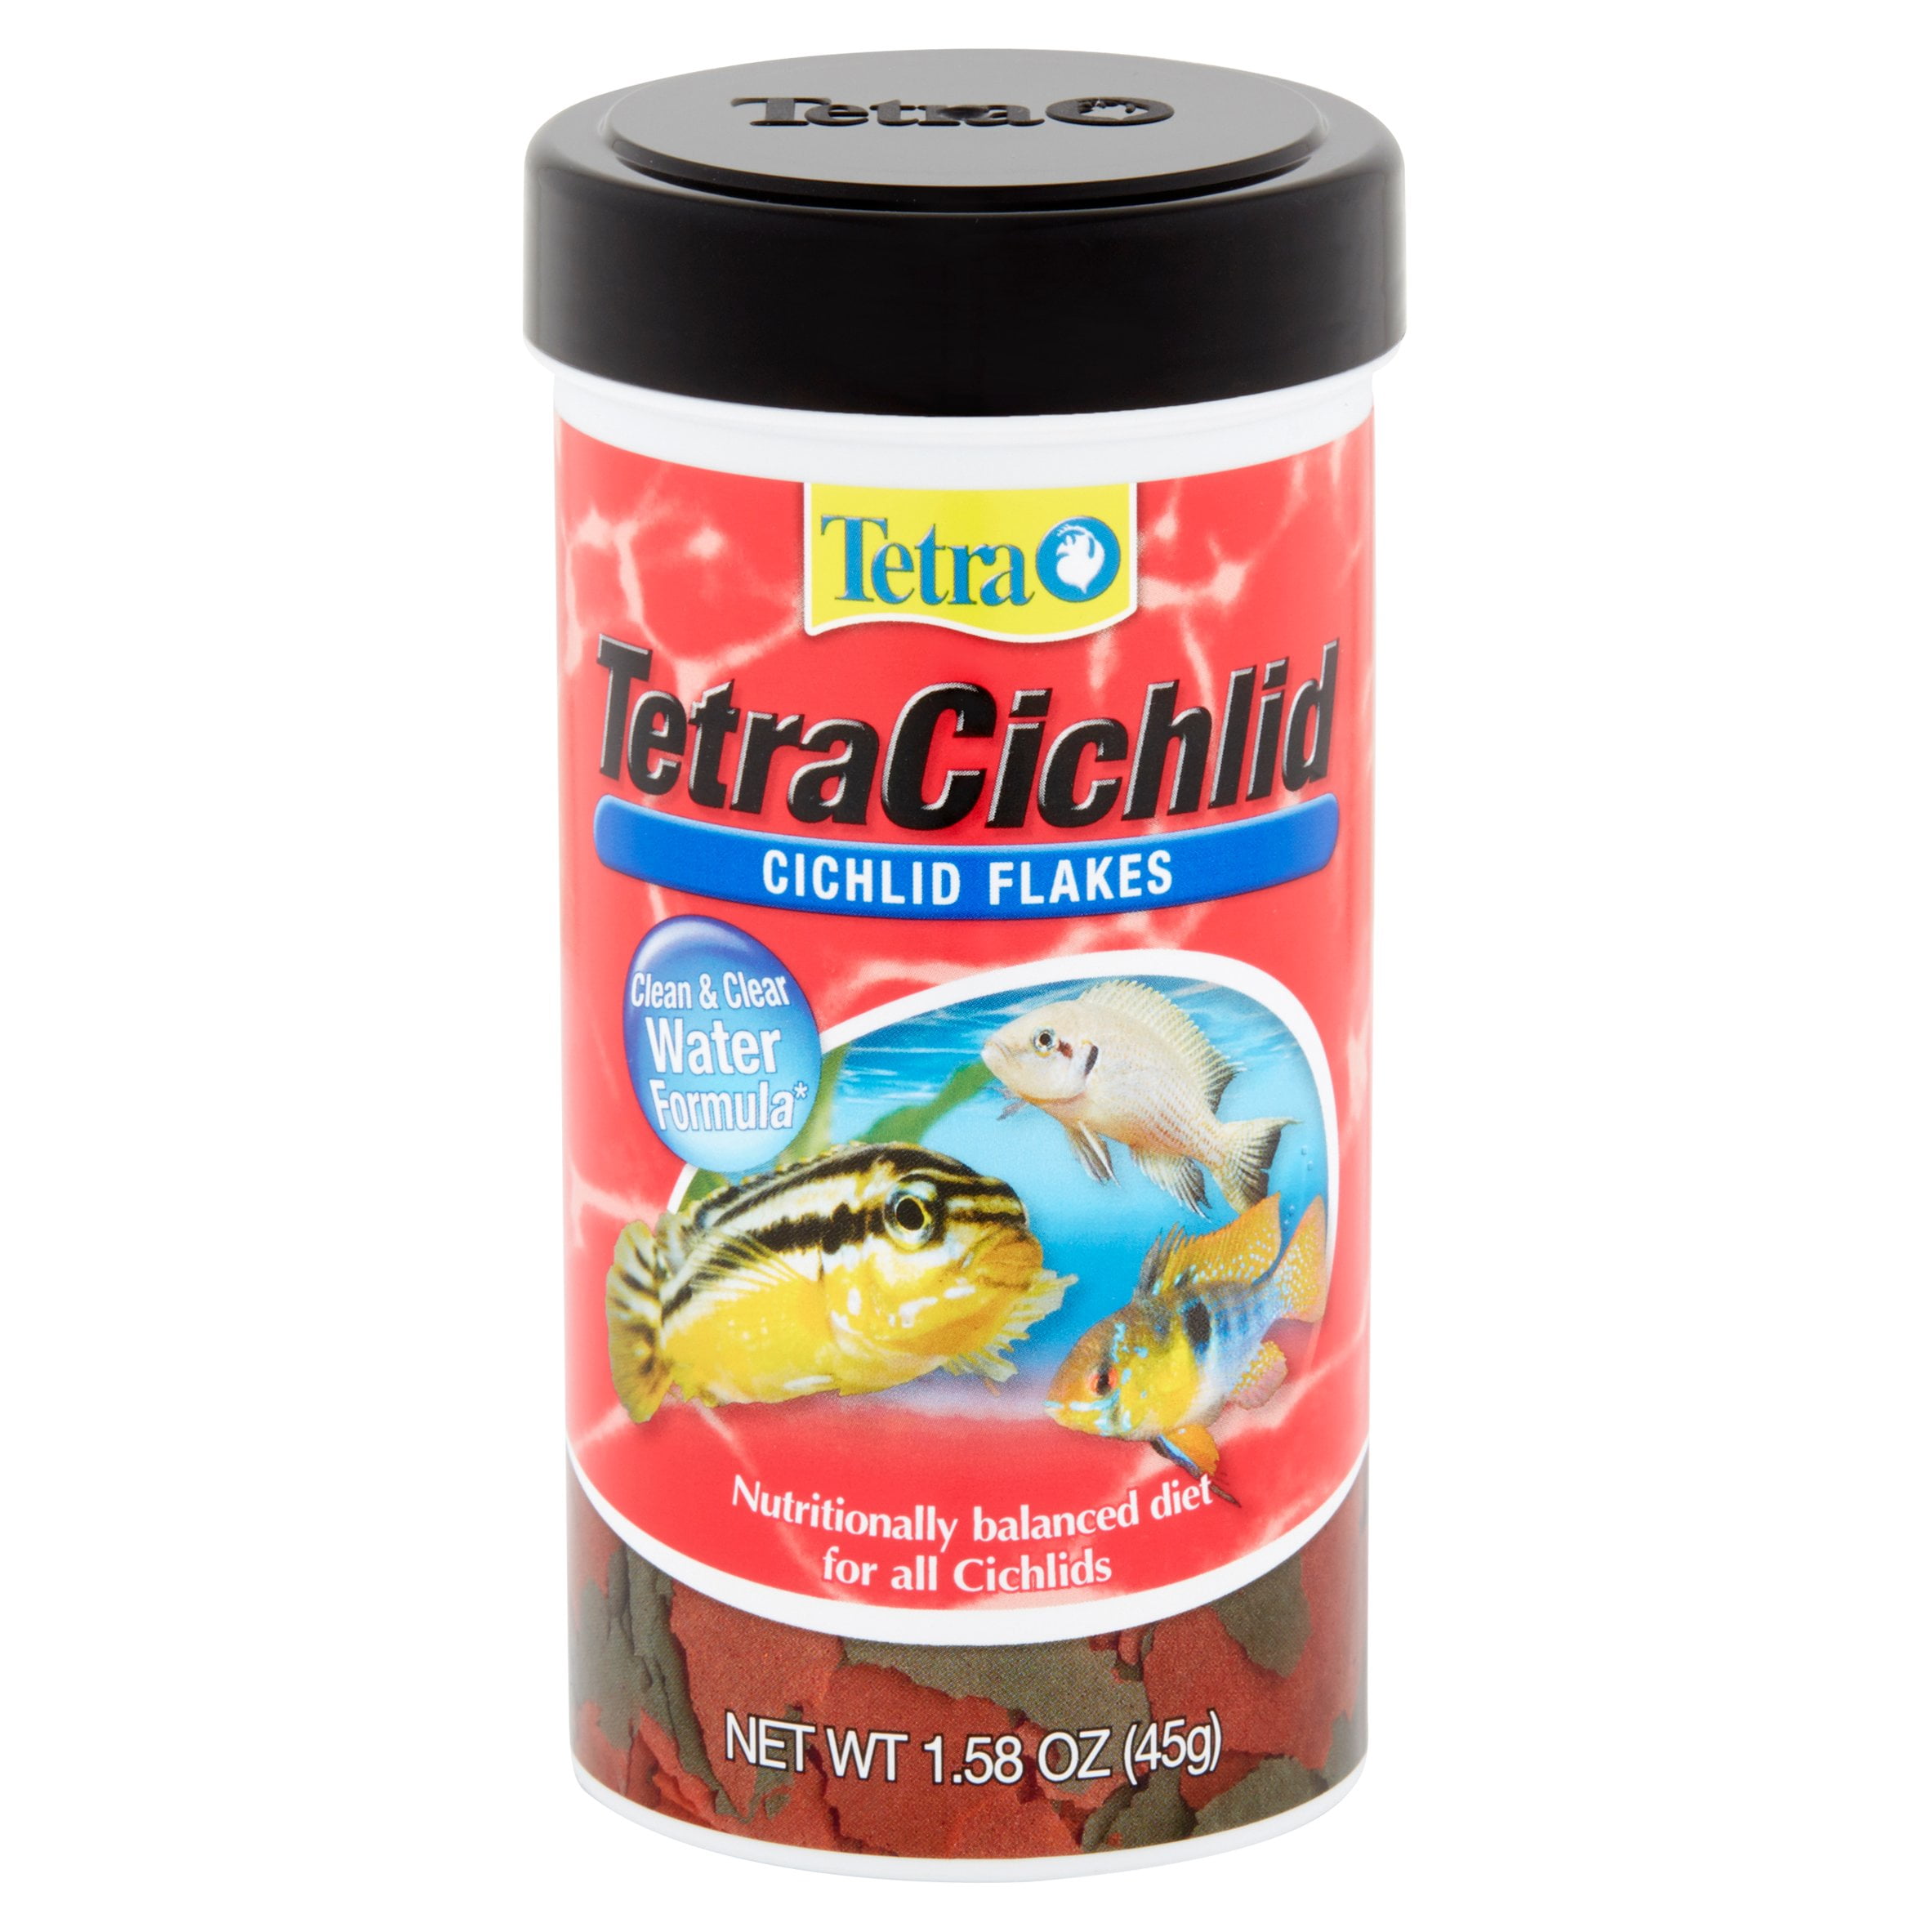 Tetra Goldfish Flakes, Nutritionally Balanced Diet for Aquarium Fish,  Vitamin C Enriched Flakes, 1 oz (36 Pack)